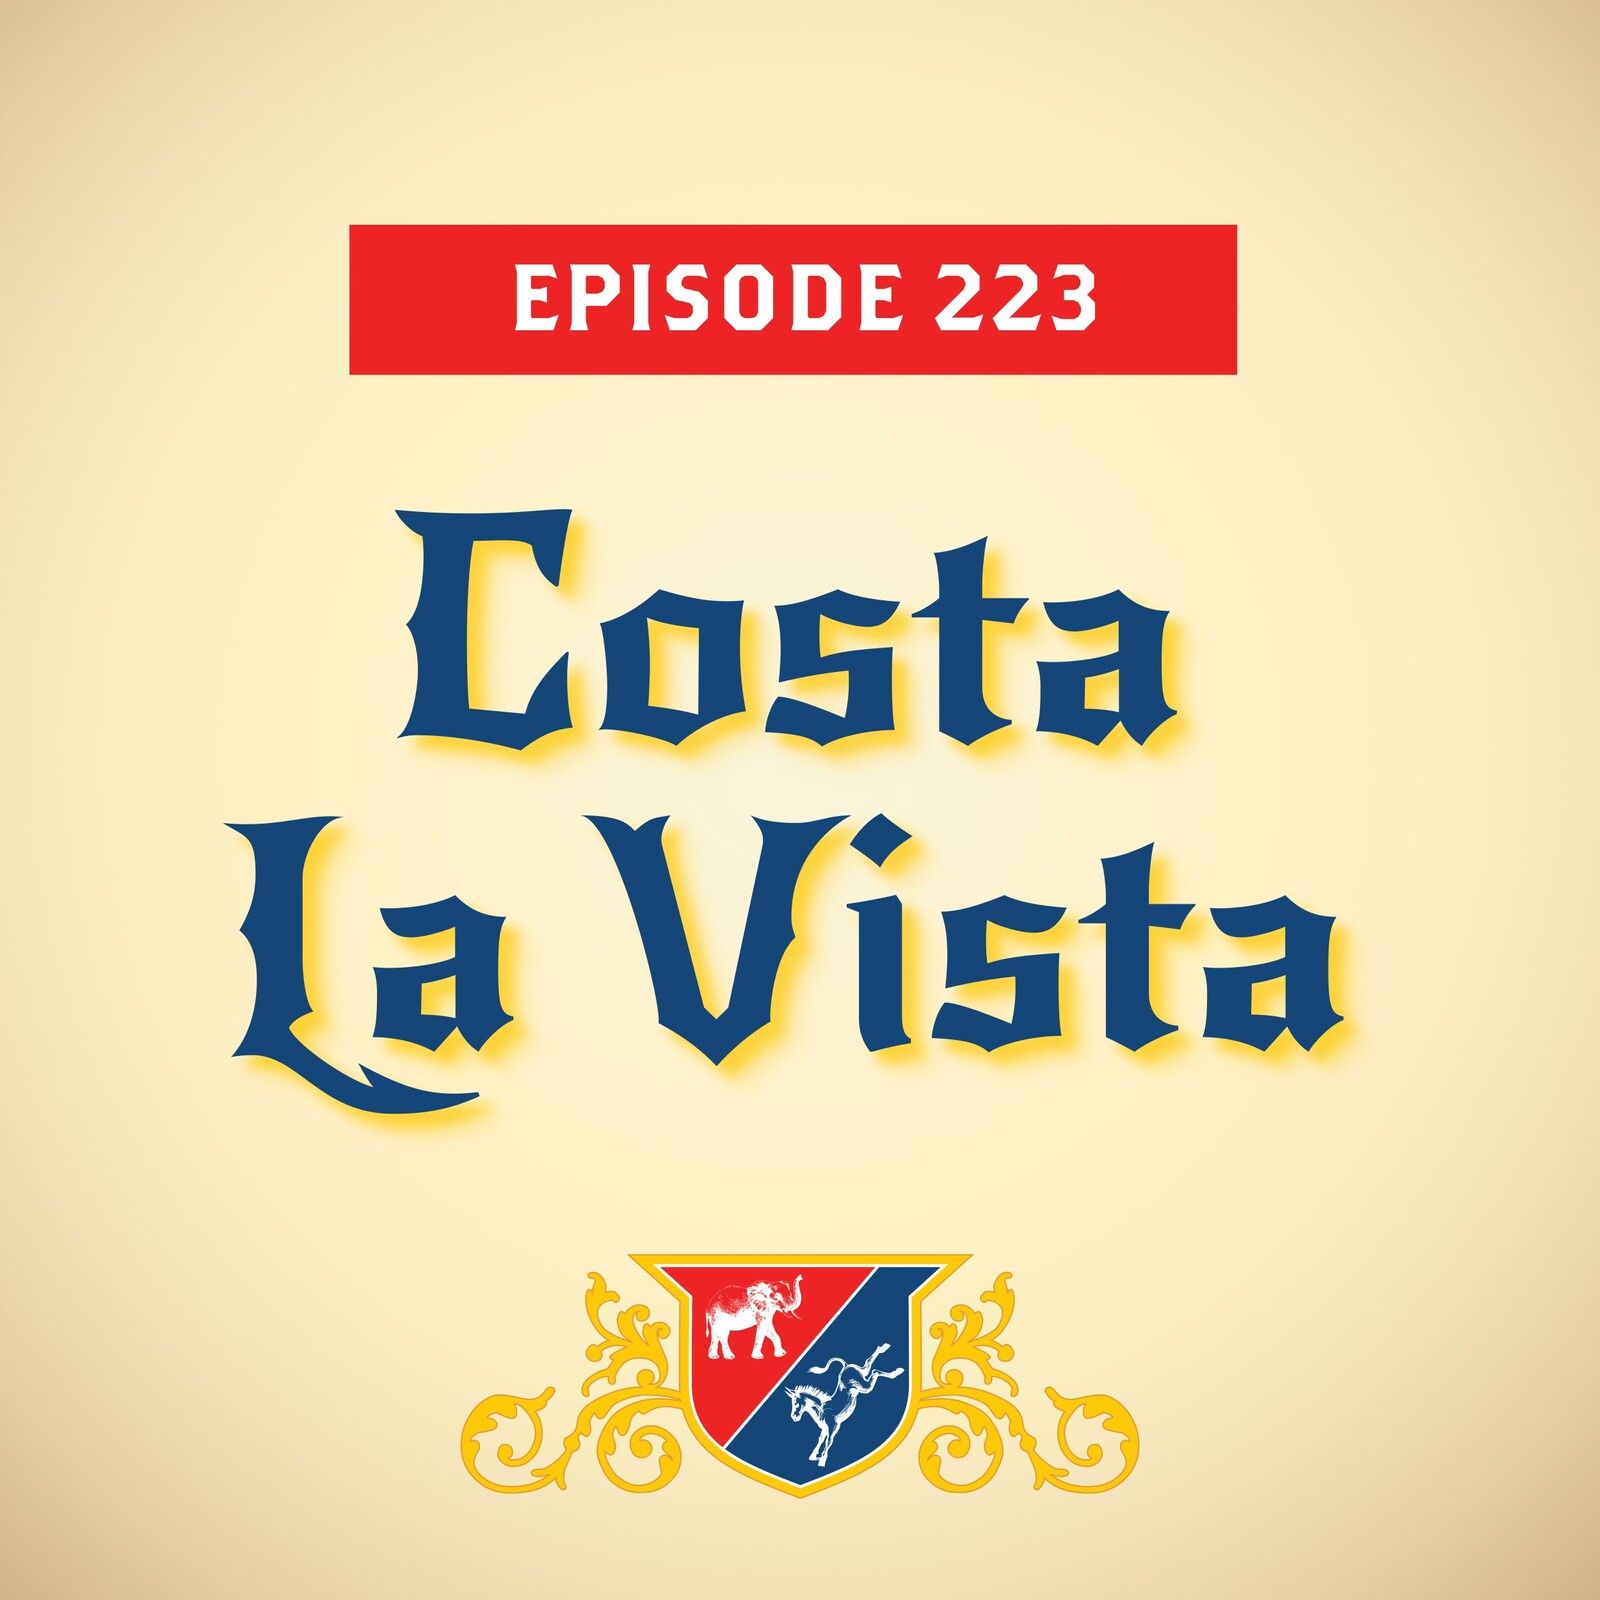 Costa La Vista (with Robert Costa)